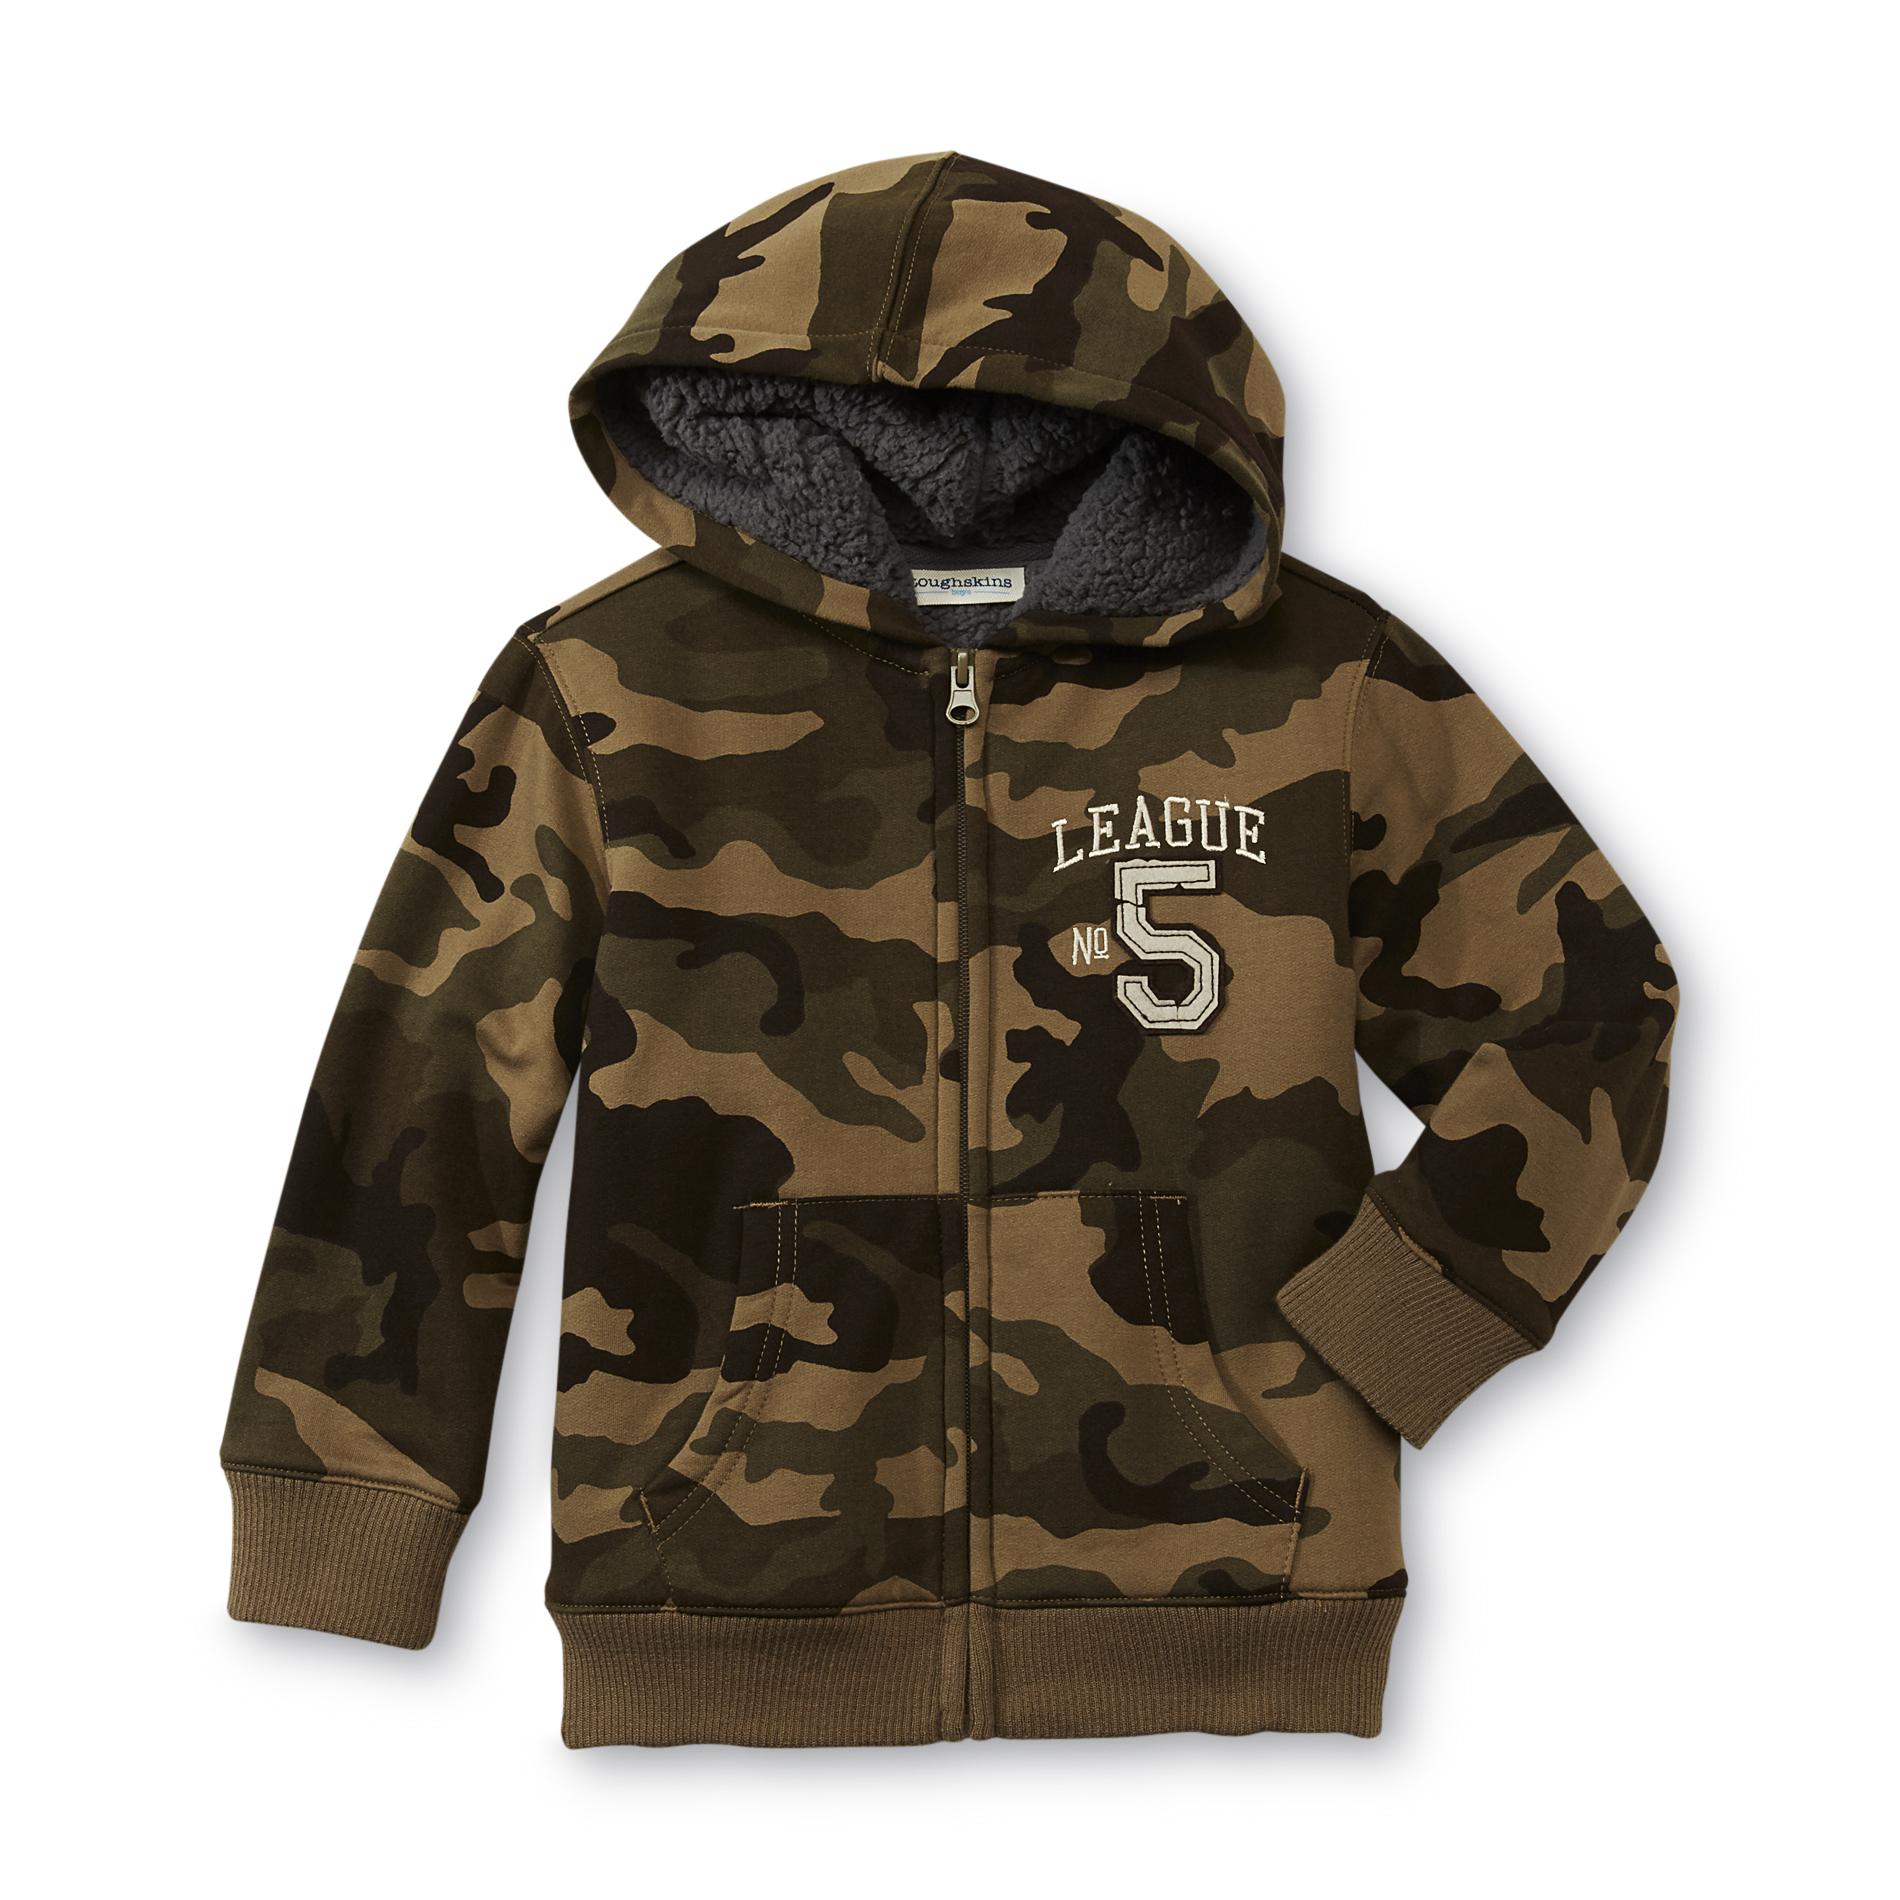 Toughskins Boy's Hoodie Jacket - Camouflage